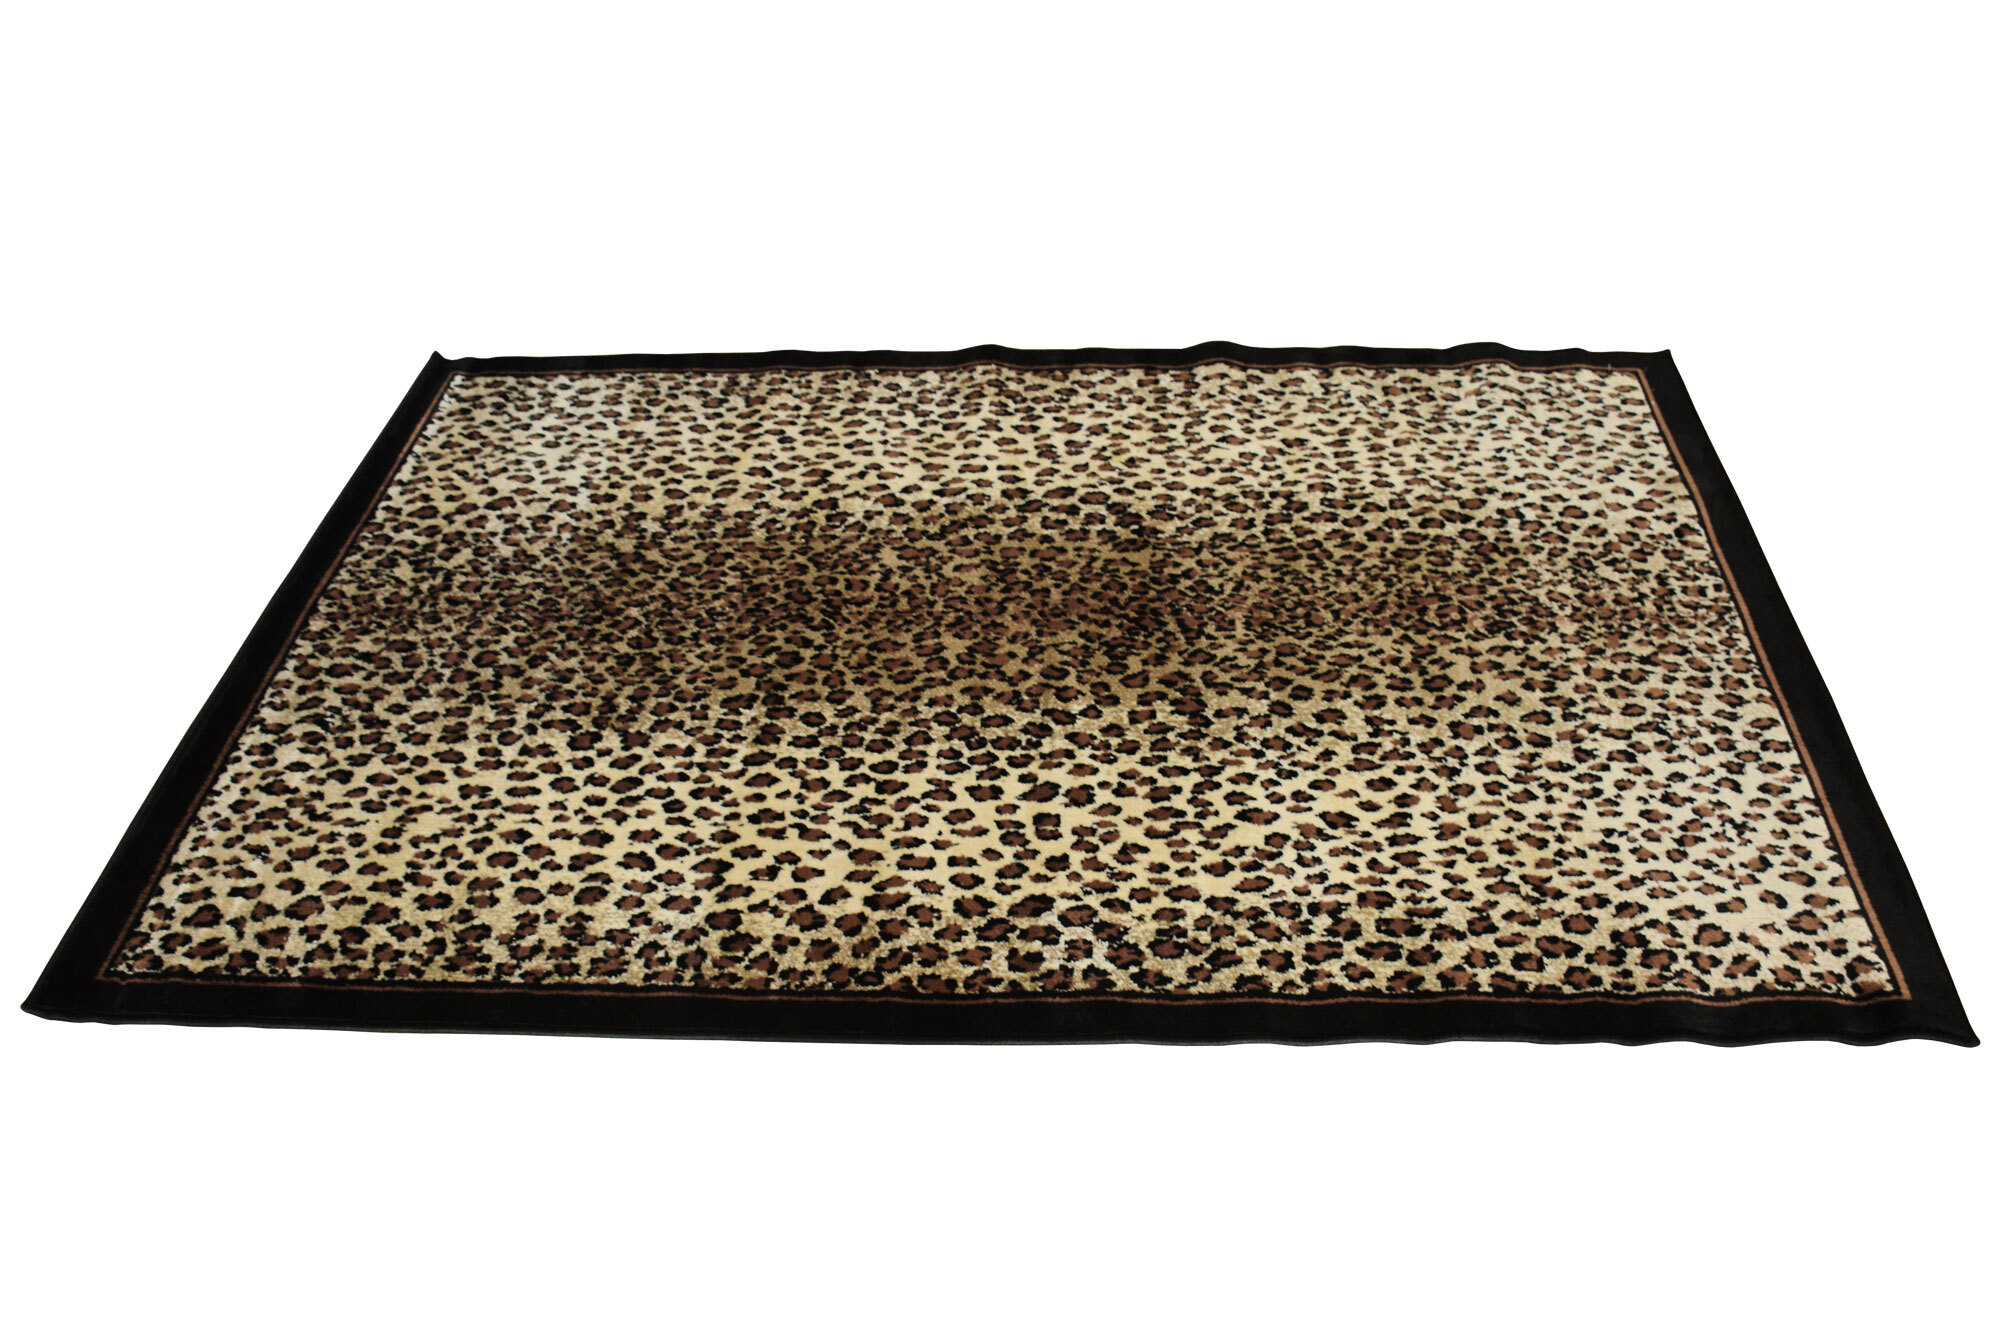 Safa Animal Print Rug, Leopard Spot Rug